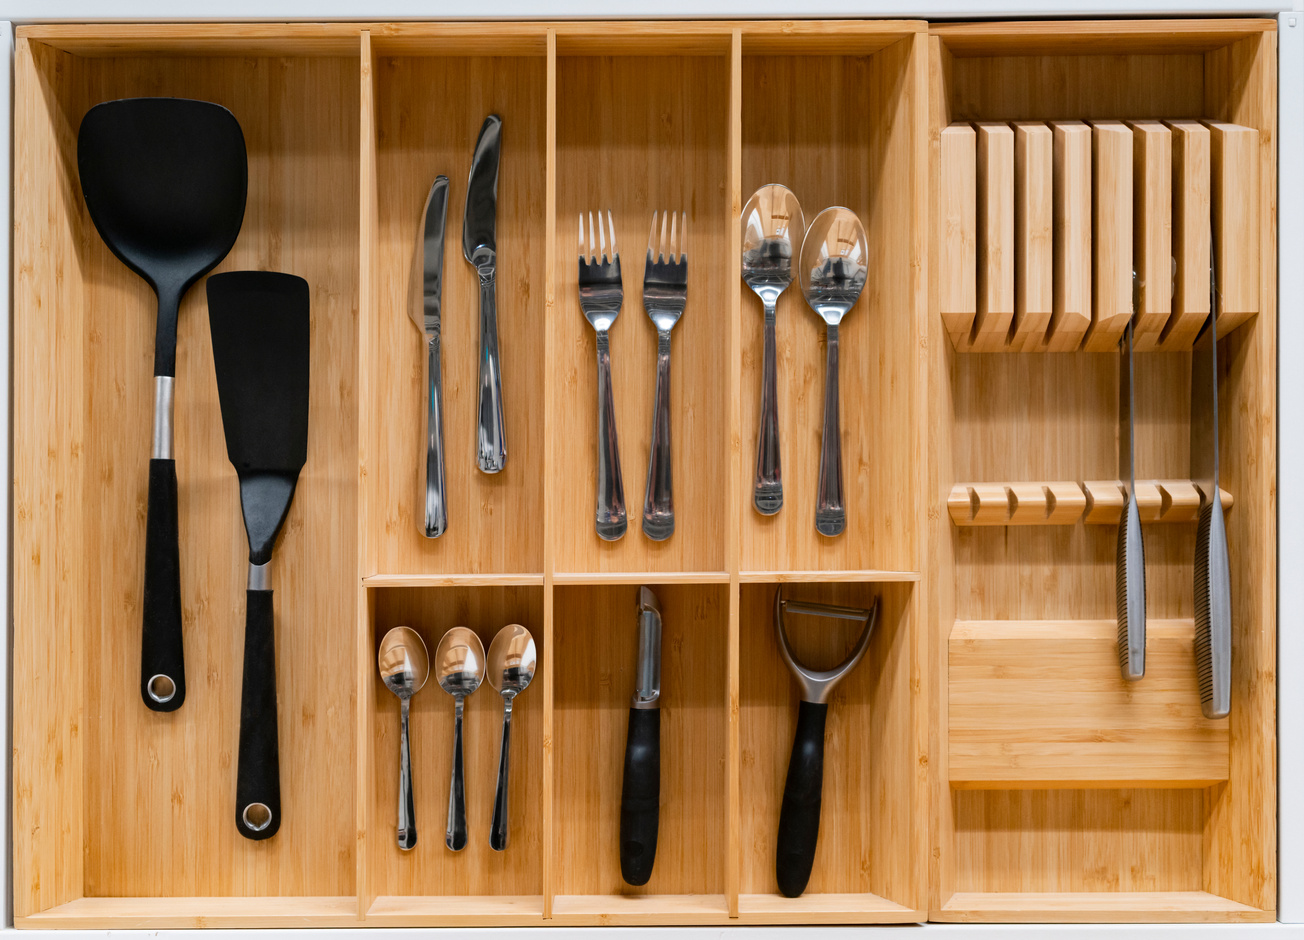 Top view of organized kitchen drawers. Modern kitchen organization of spaces.